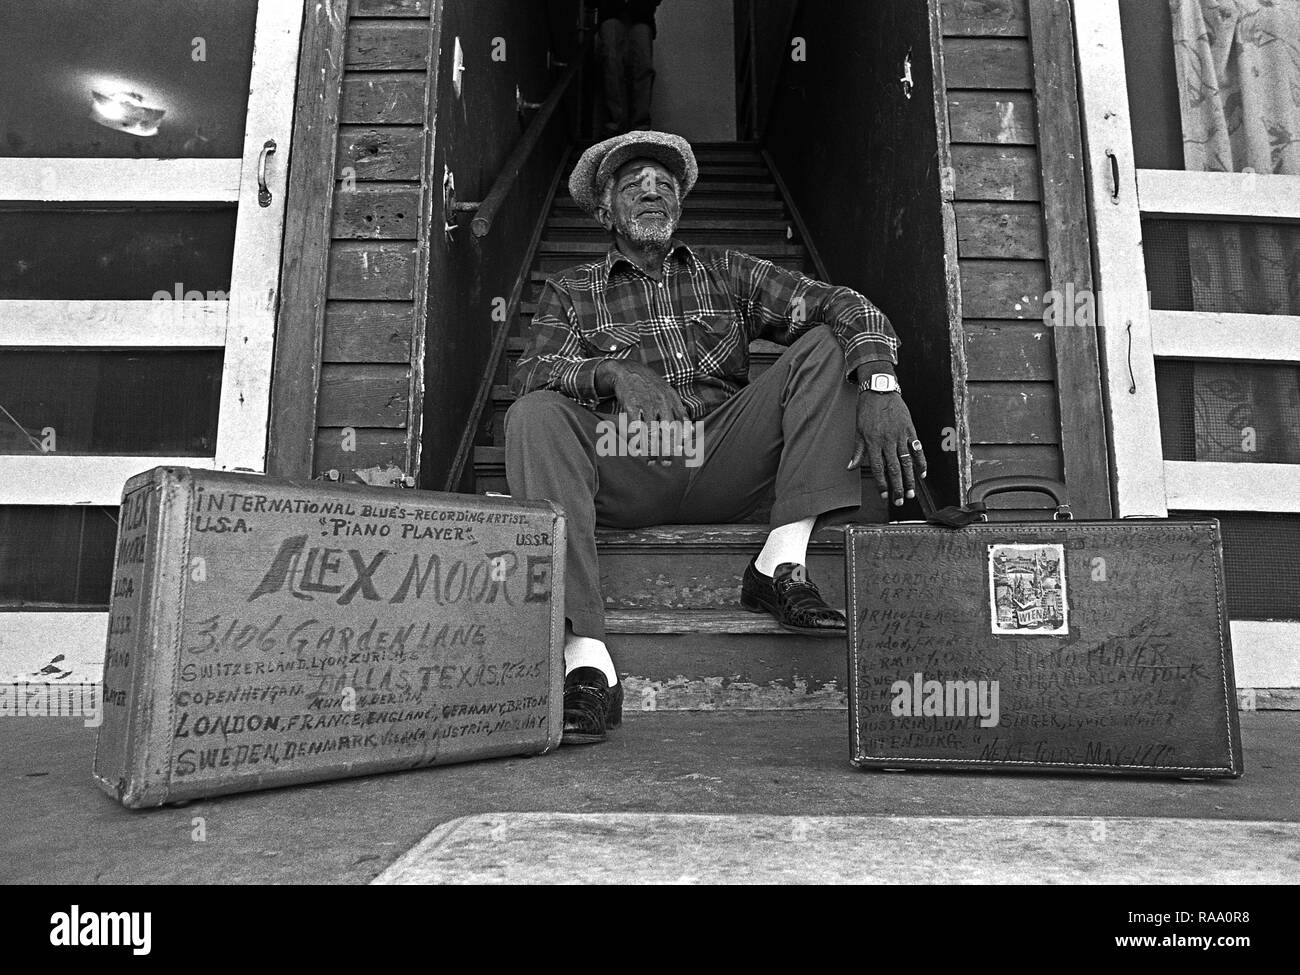 Alex Moore, legendary Texas Blues pianist Stock Photo